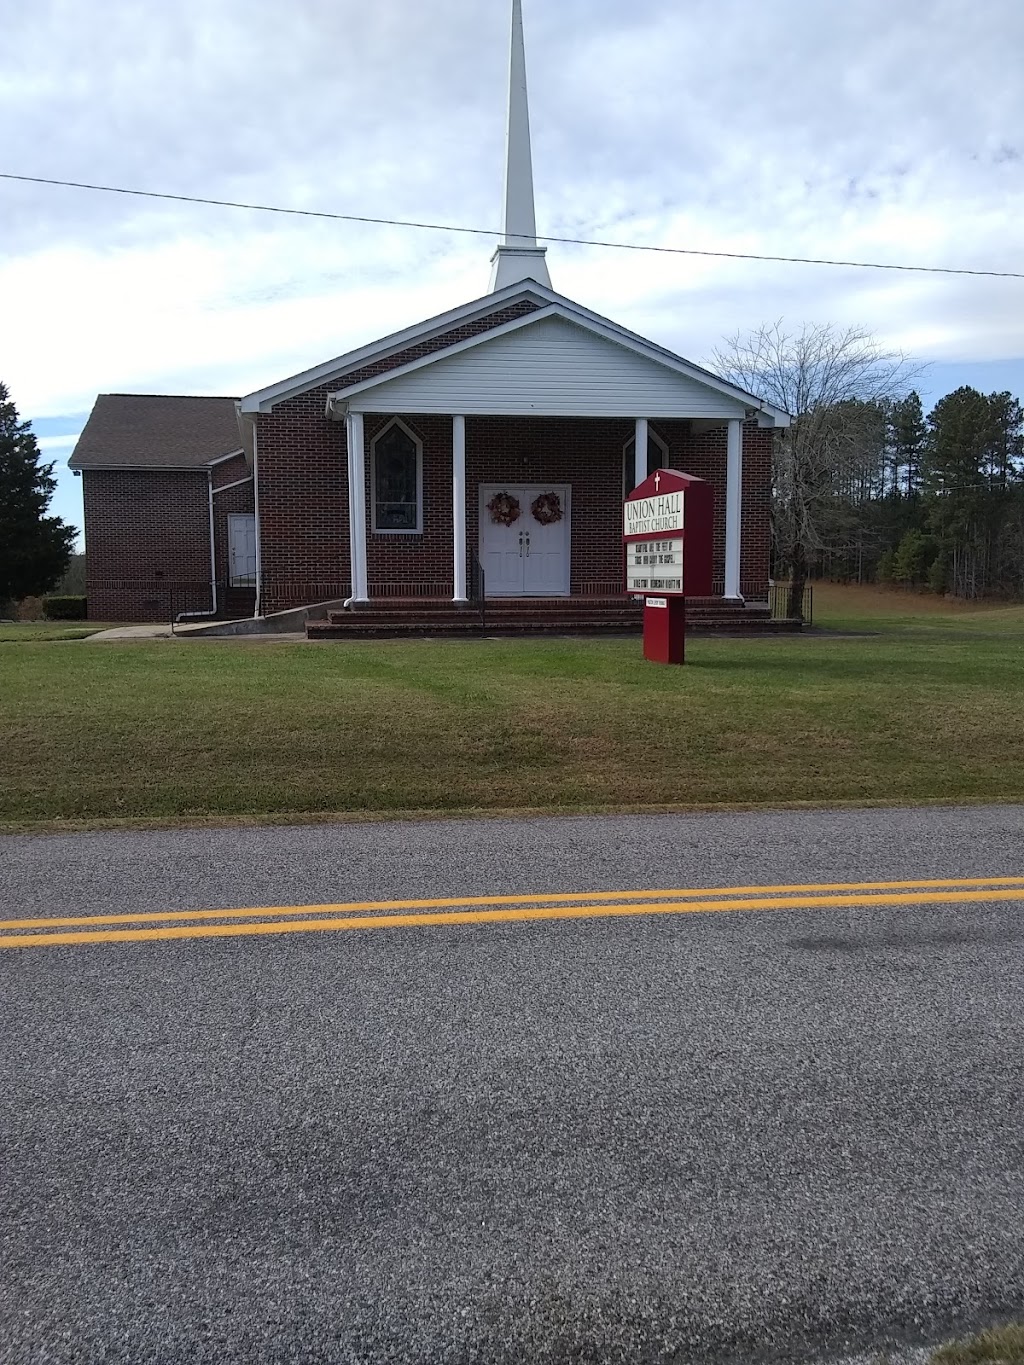 Union Hall Baptist Church | 6860 Strawberry Rd, Chatham, VA 24531, USA | Phone: (434) 724-4029